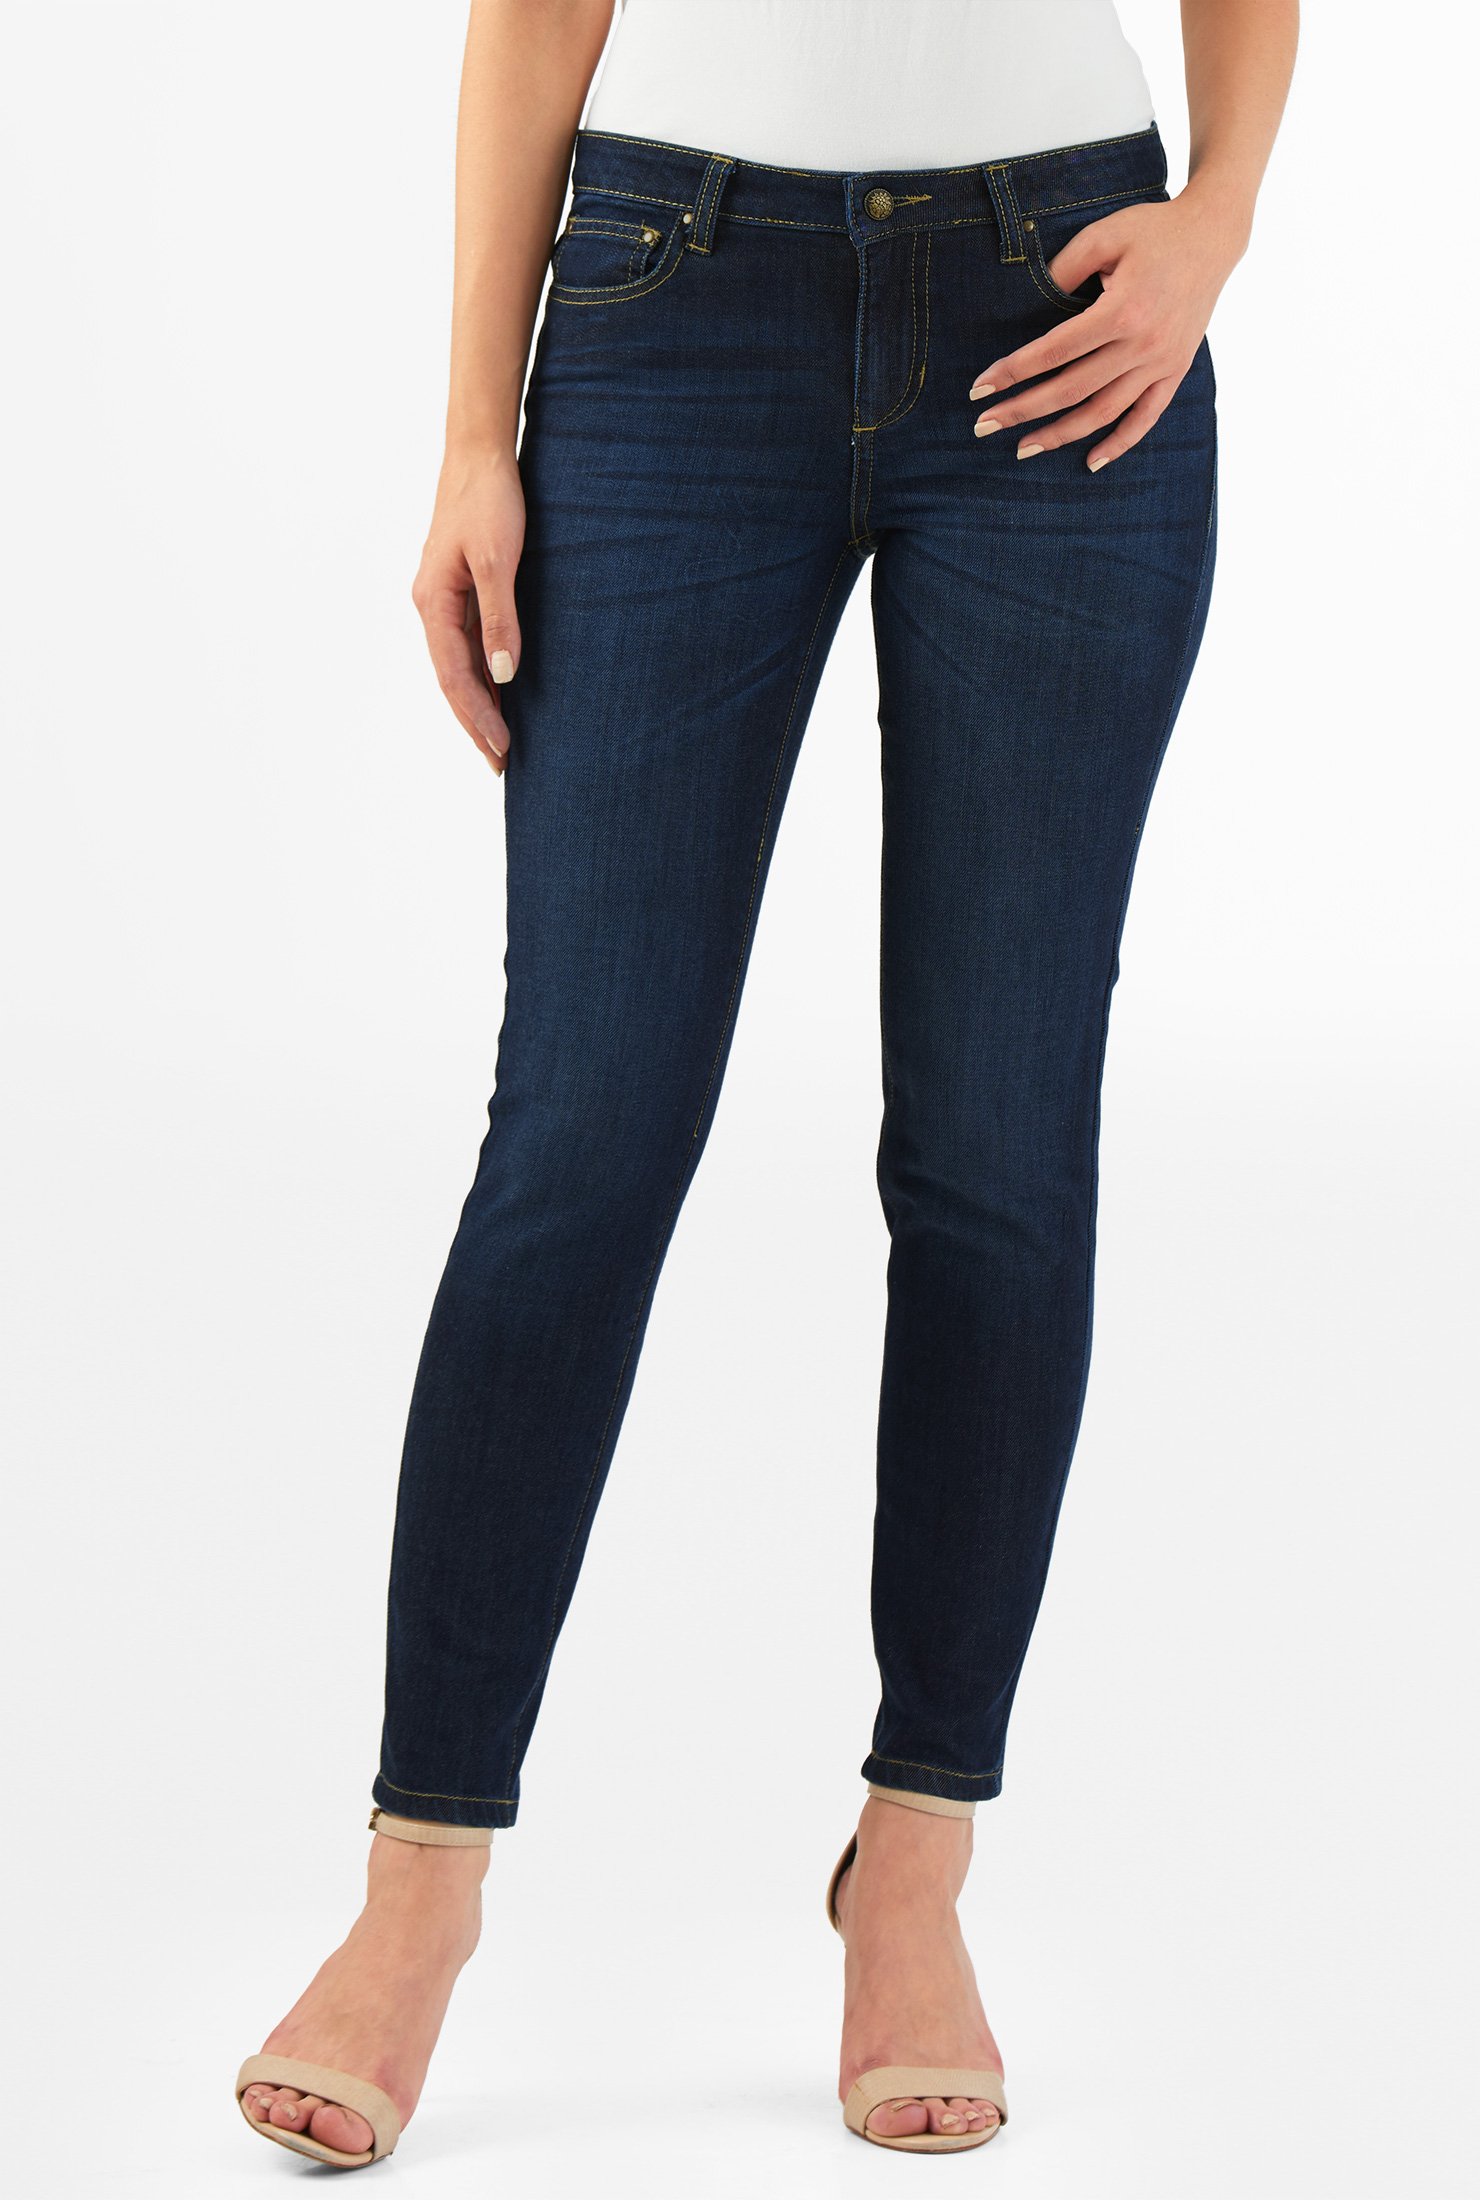 Shop Deep indigo denim skinny jeans | eShakti